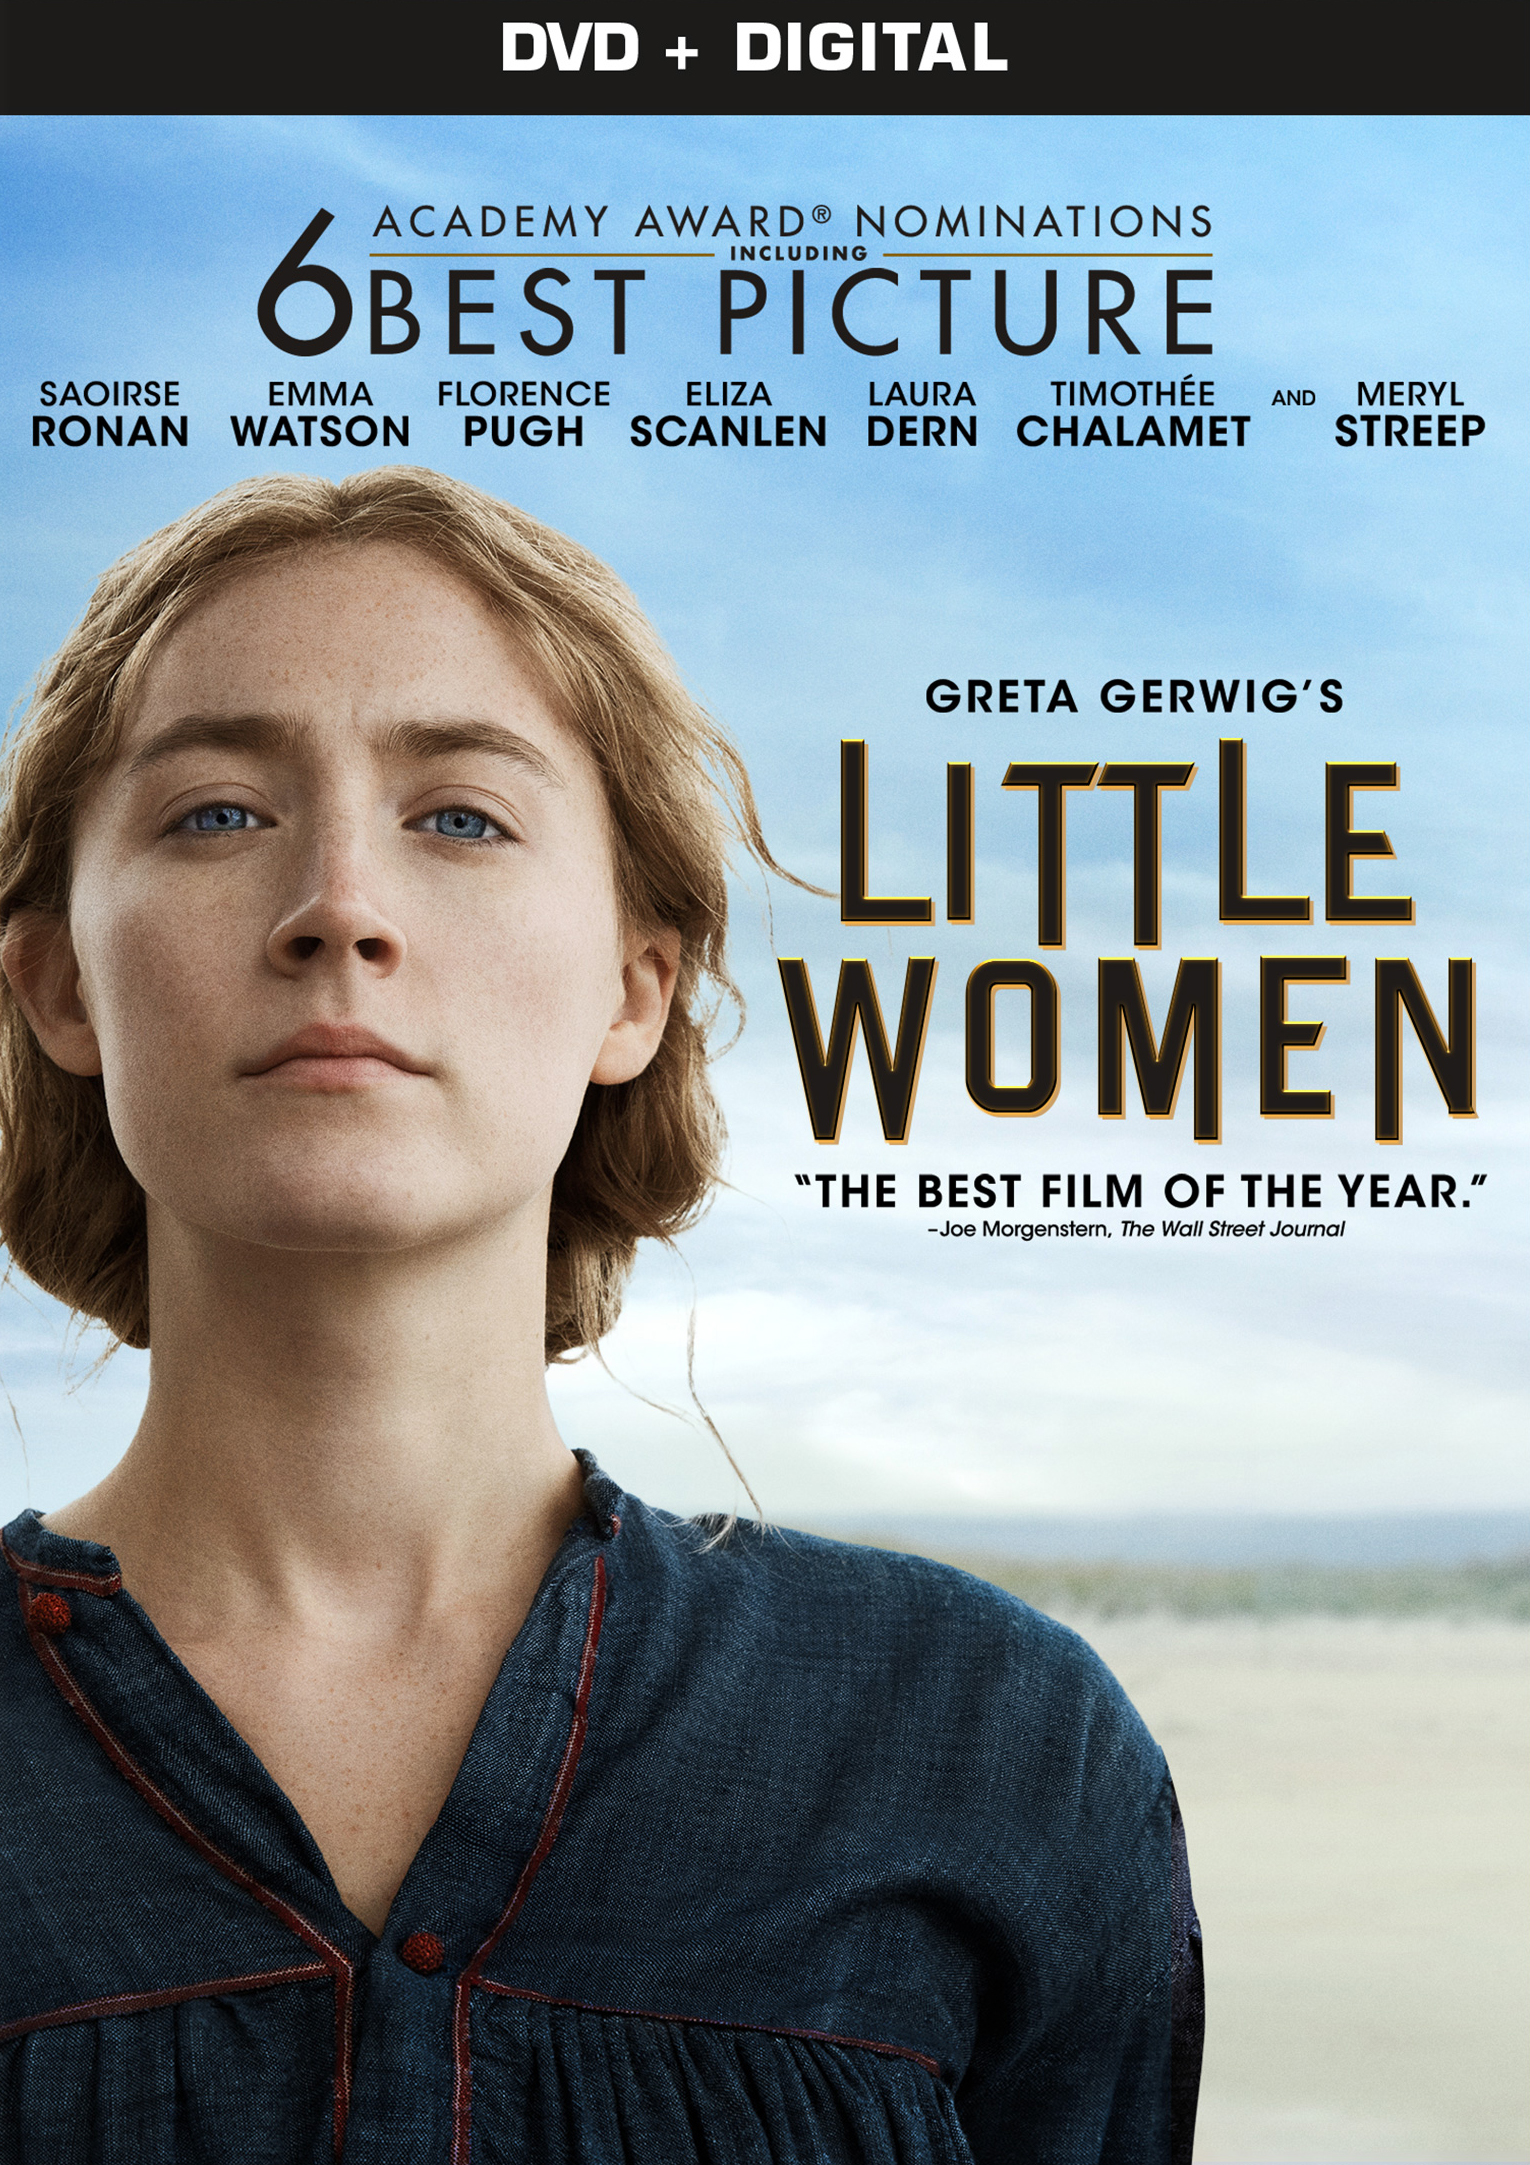 Little women [DVD] (2019).  Directed by Greta Gerwig.